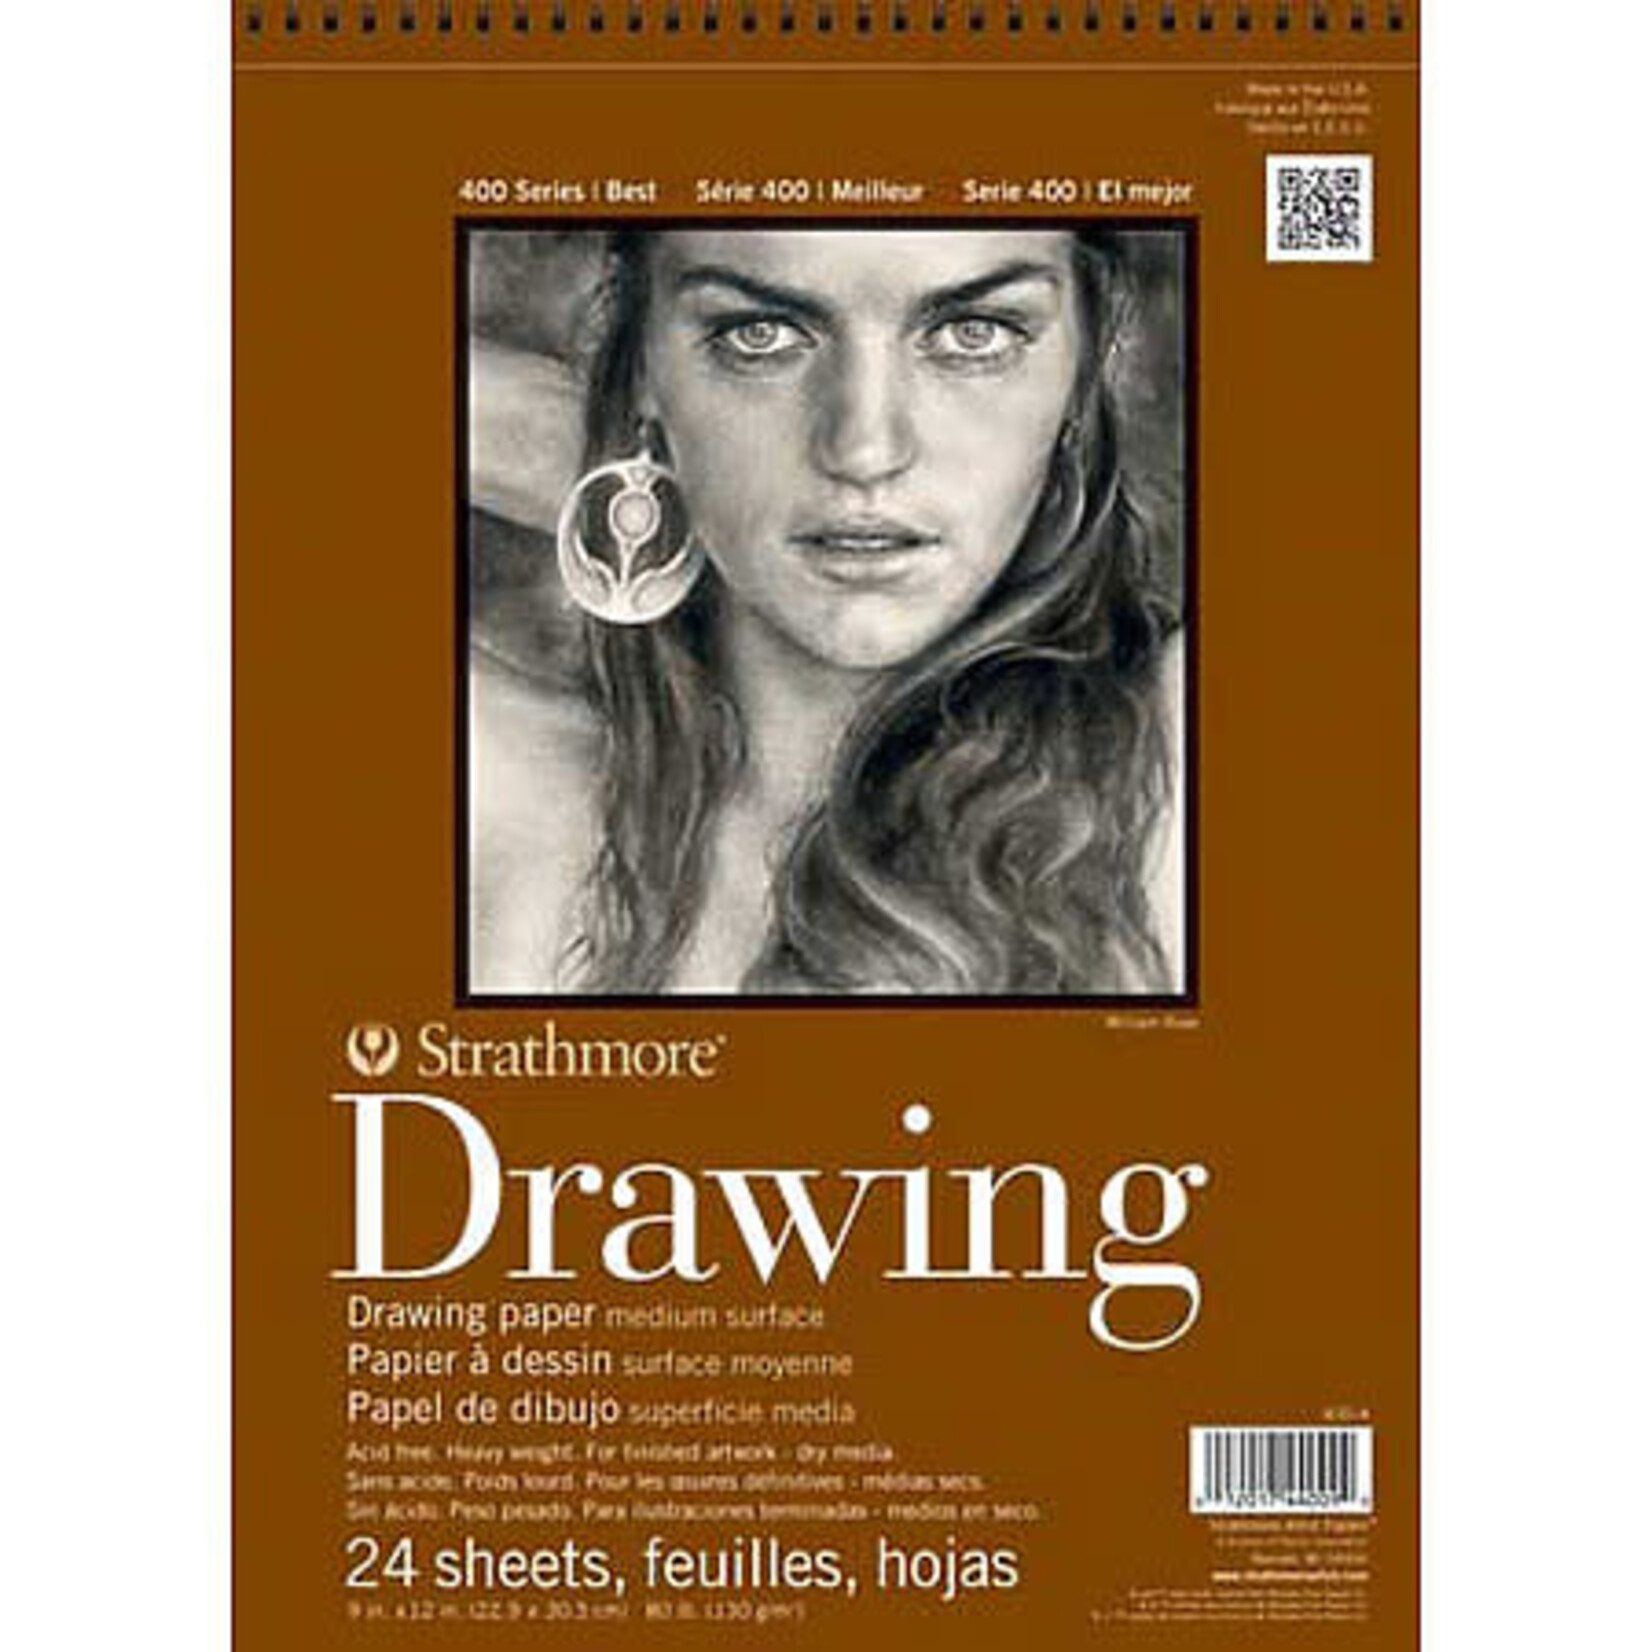 Strathmore Drawing Pads 400 Series, Medium Surface, 11 X 14